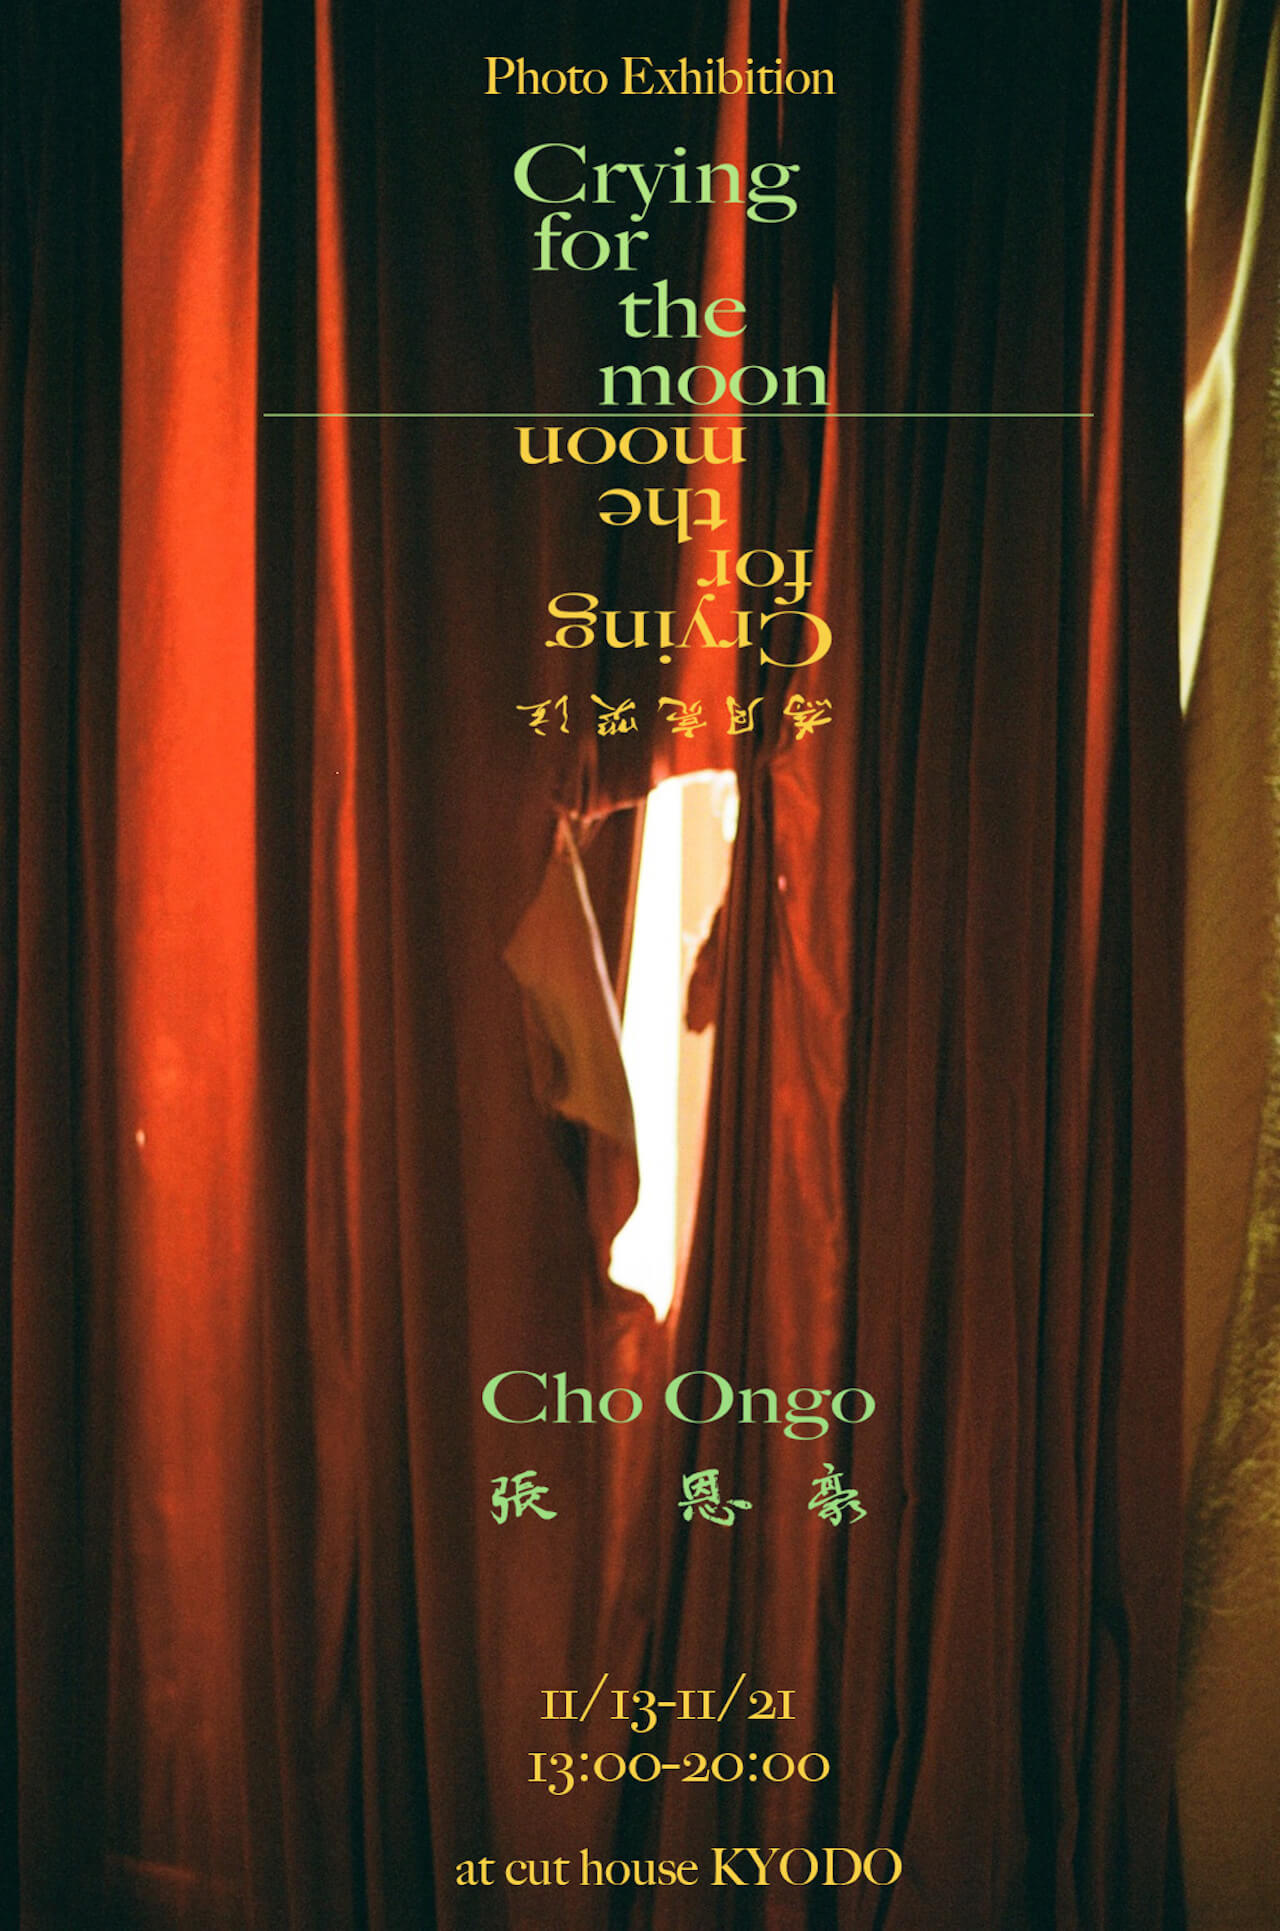 Cho Ongo、約2年ぶりの写真集『Crying for the moon』を発表｜テーマは“ないものねだり”、写真展も開催 art-culture211109-cho-ongo-1-1